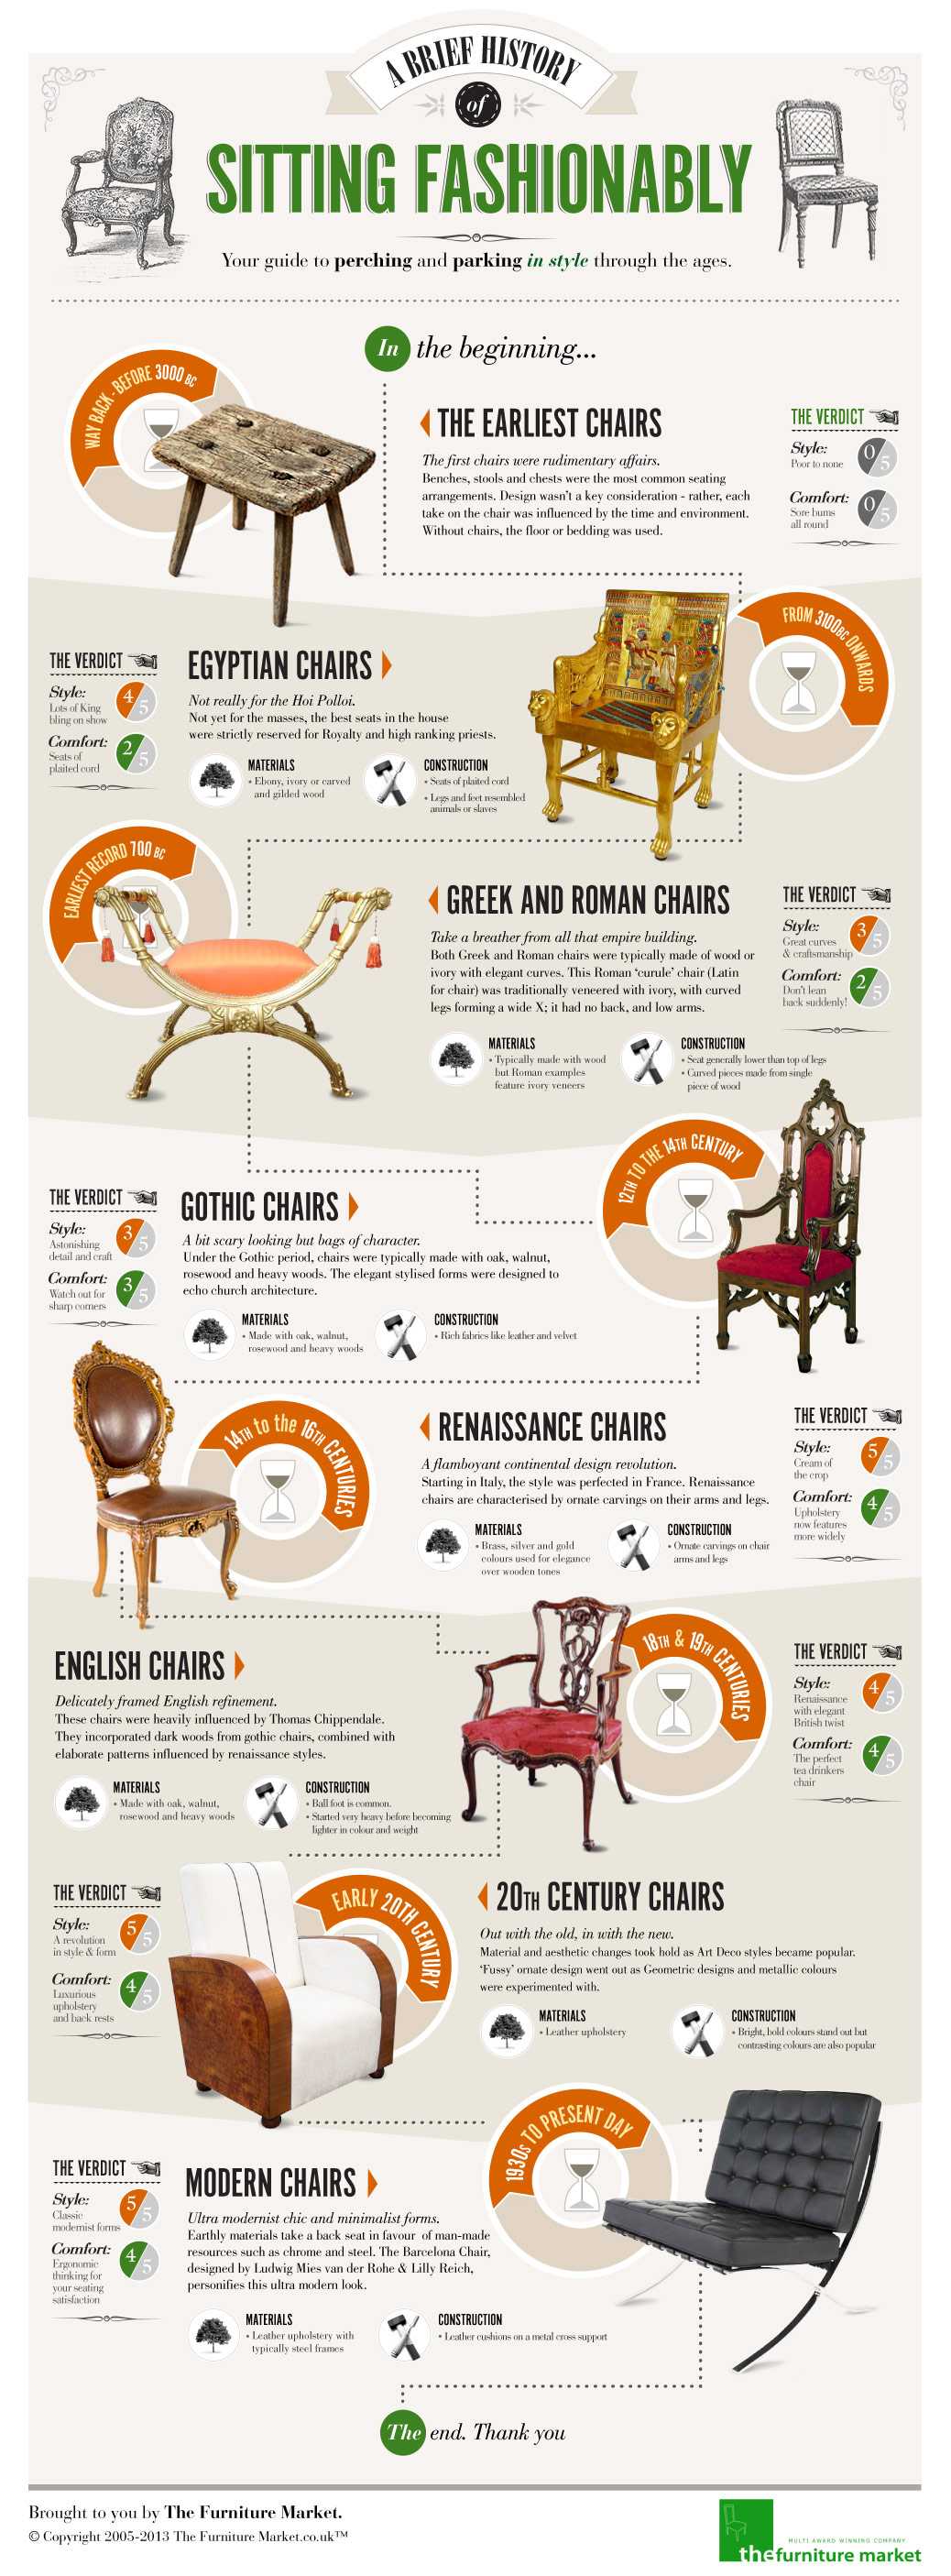 Brief History Of Sitting Fashionably